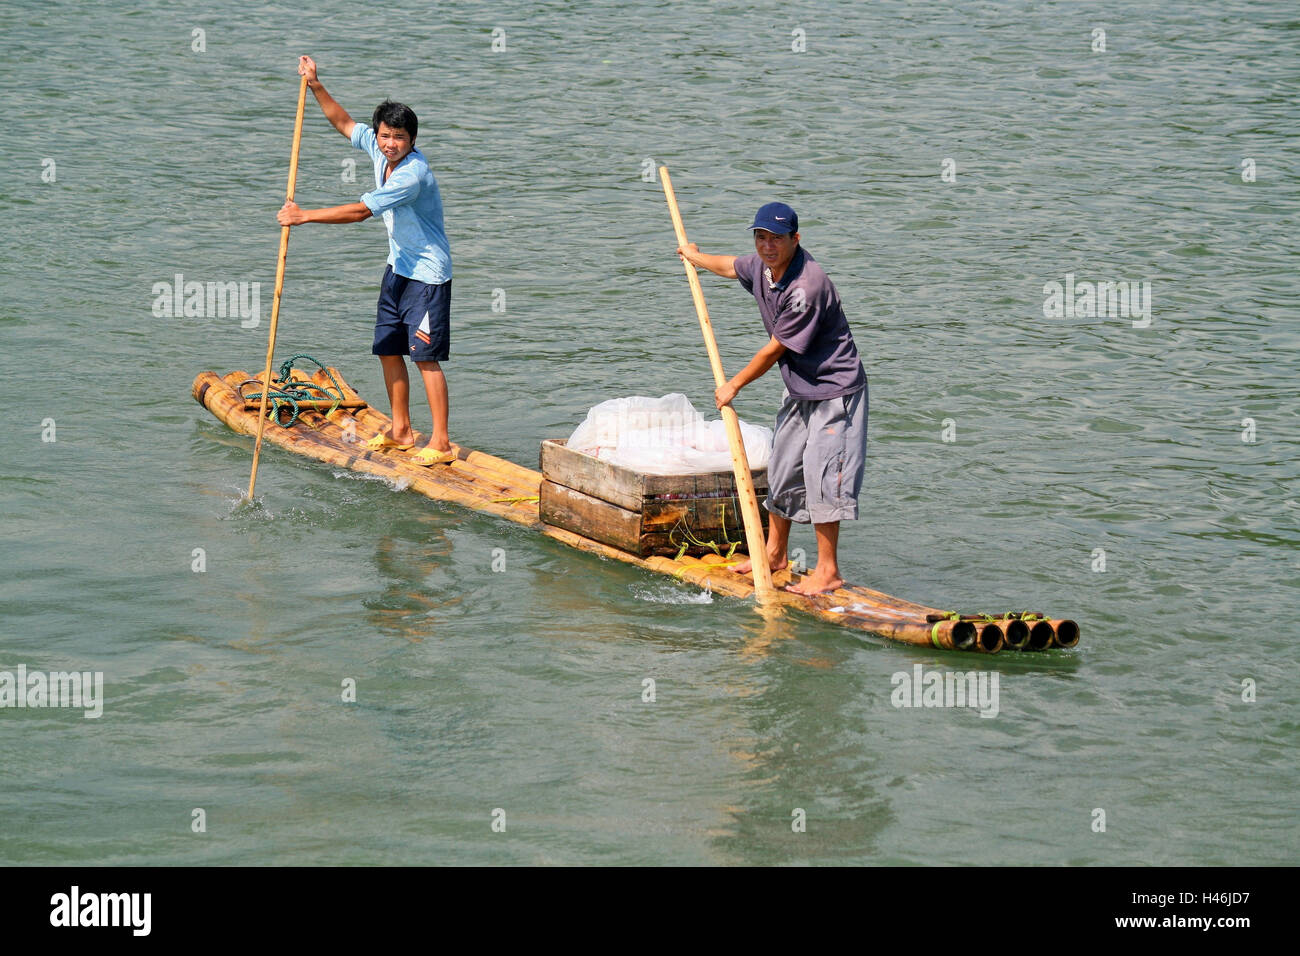 China, Li river, two men on a raft, Stock Photo